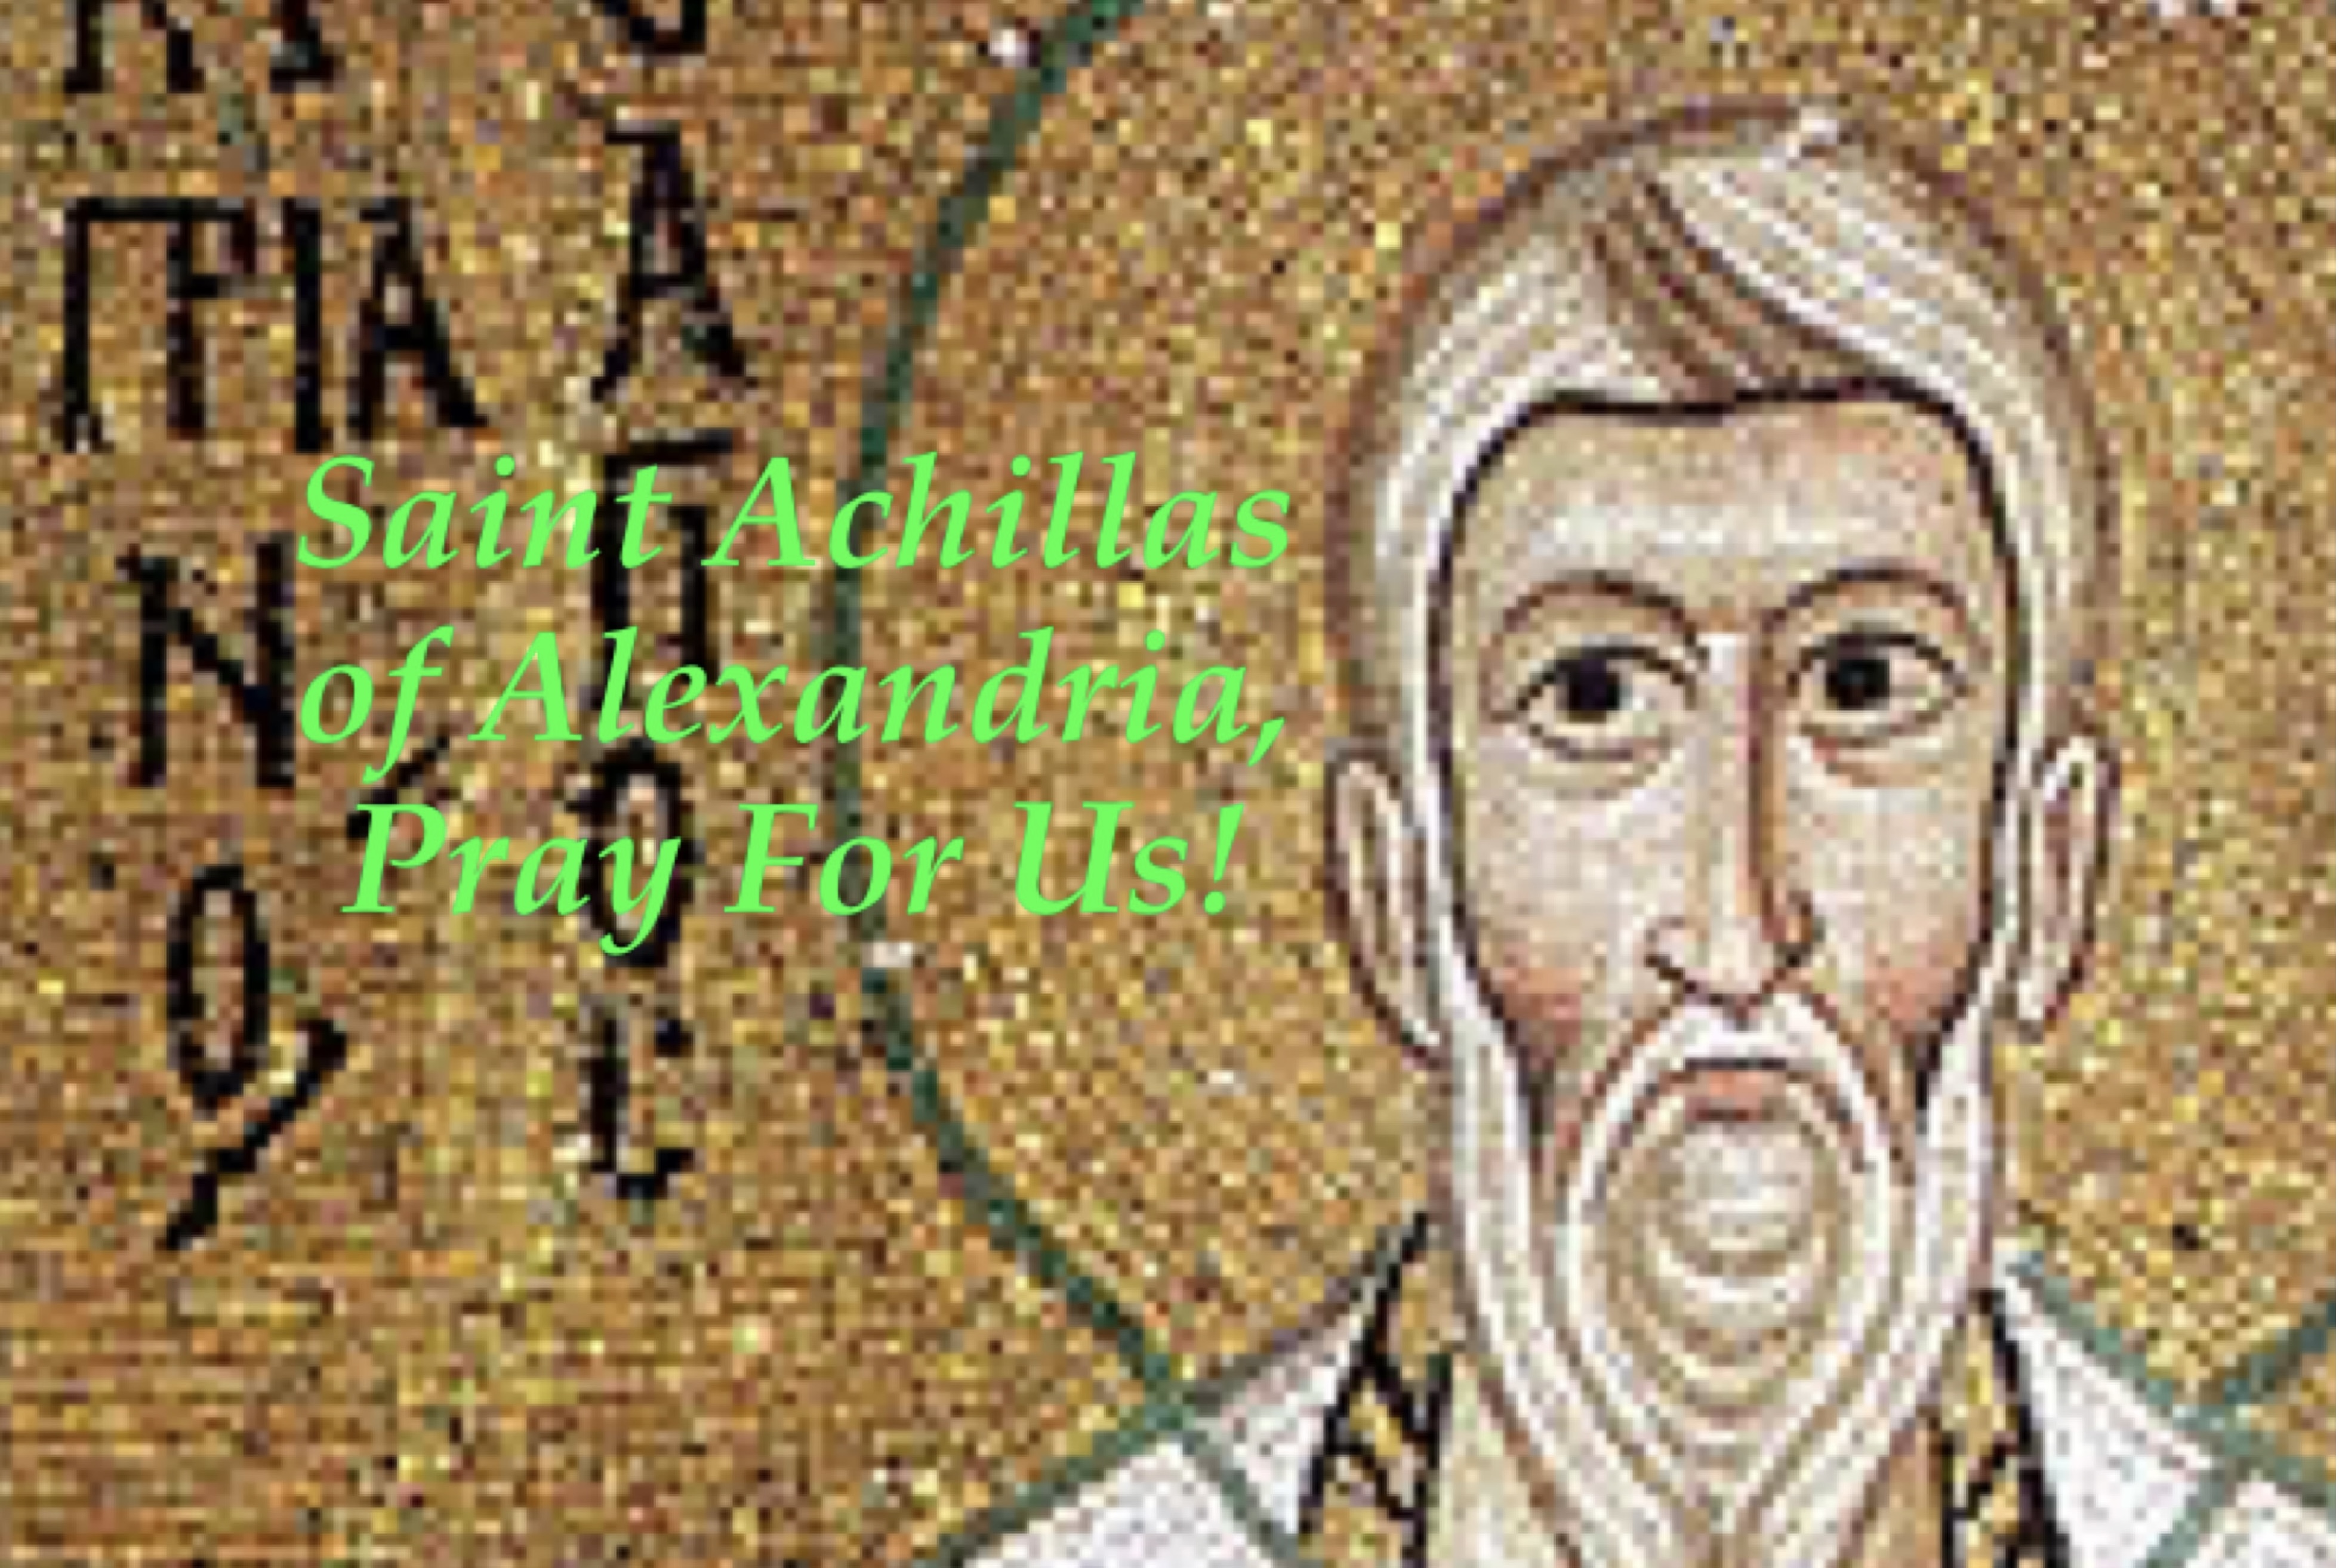 7th November - Saint Achillas of Alexandria